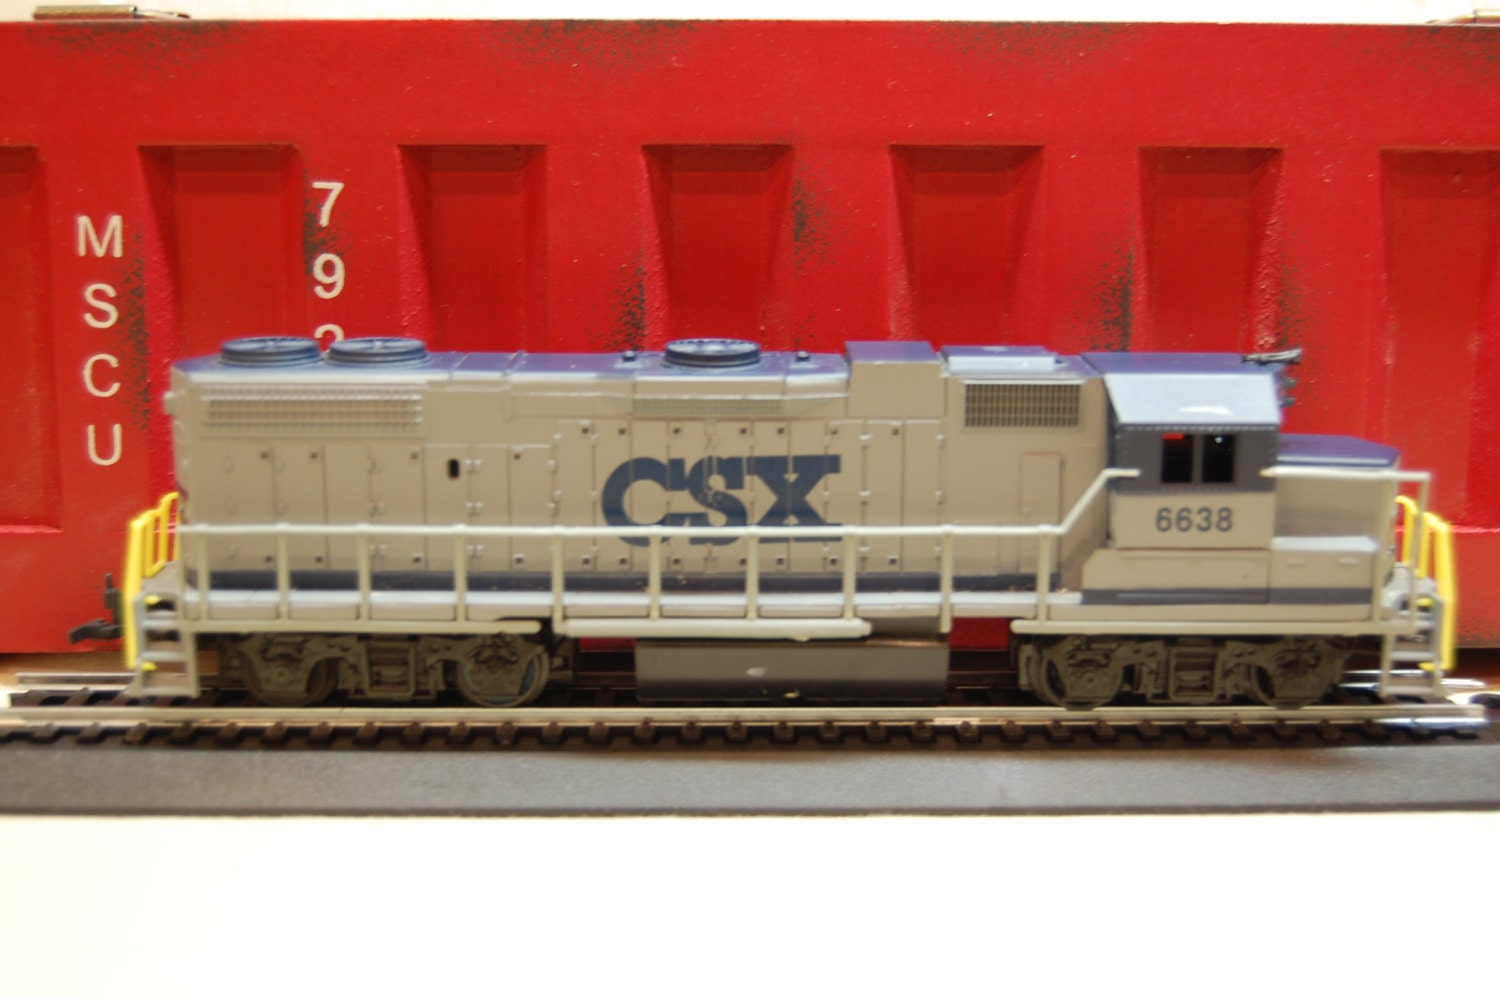 Vintage CSX Railroad Train HO Scale Engine by PickersWarehouse